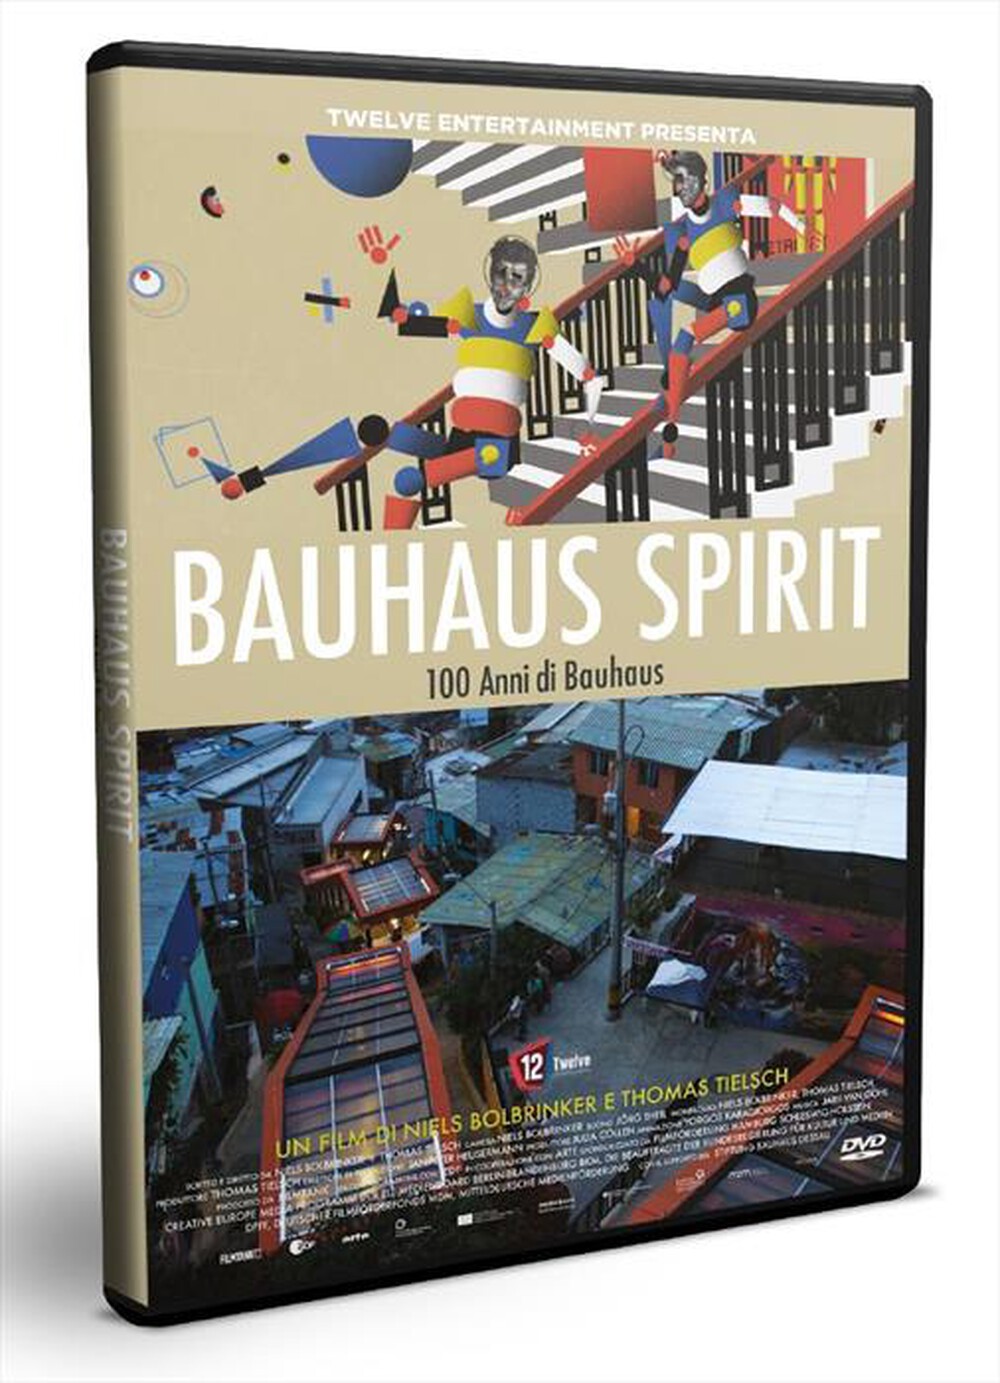 "Twelve Entertainment - Bauhaus Spirit"